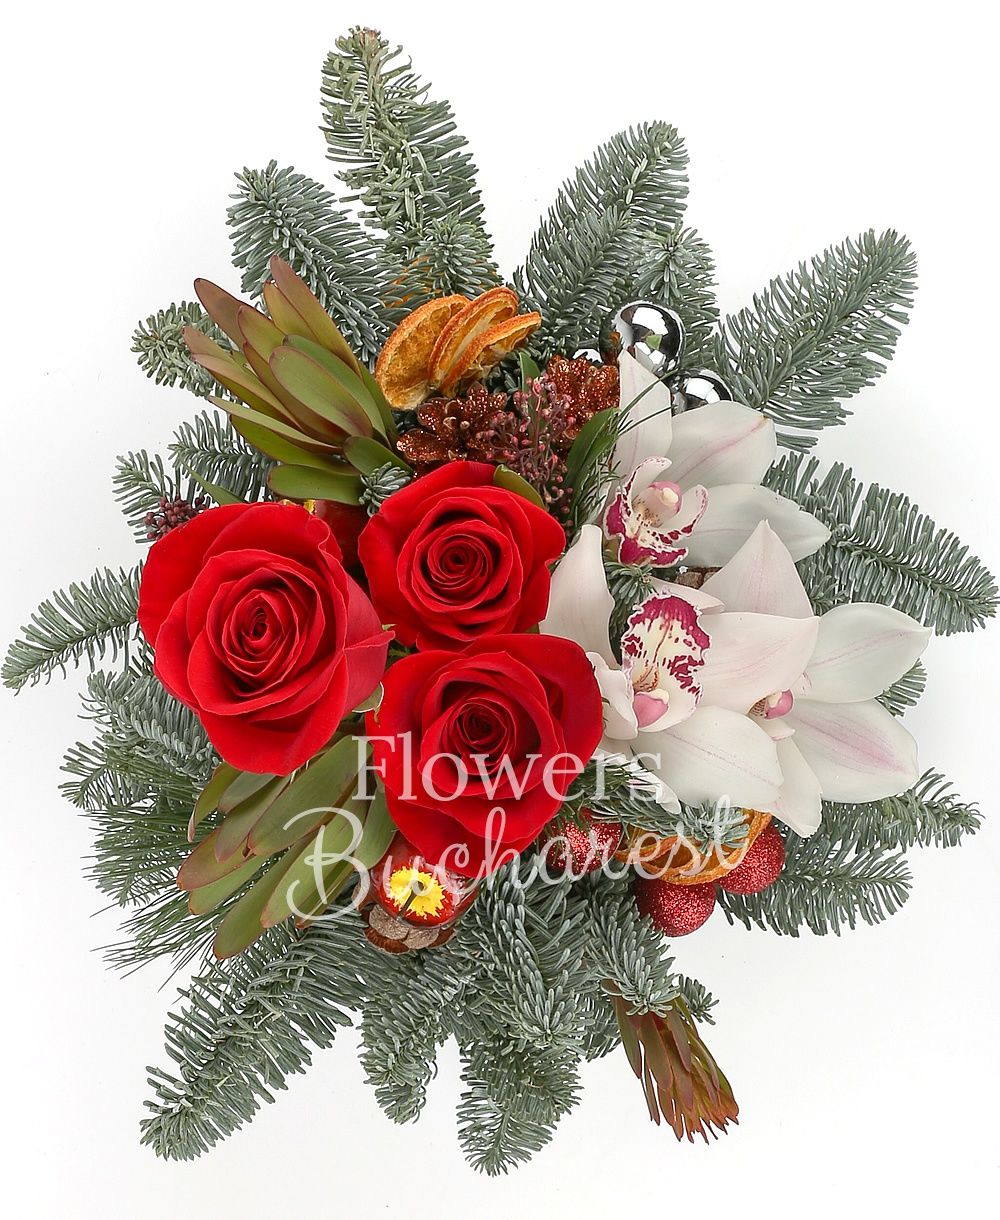 3 red roses, 3 white cymbidium, 2 leucadendron, 5 globes, decorations, basket